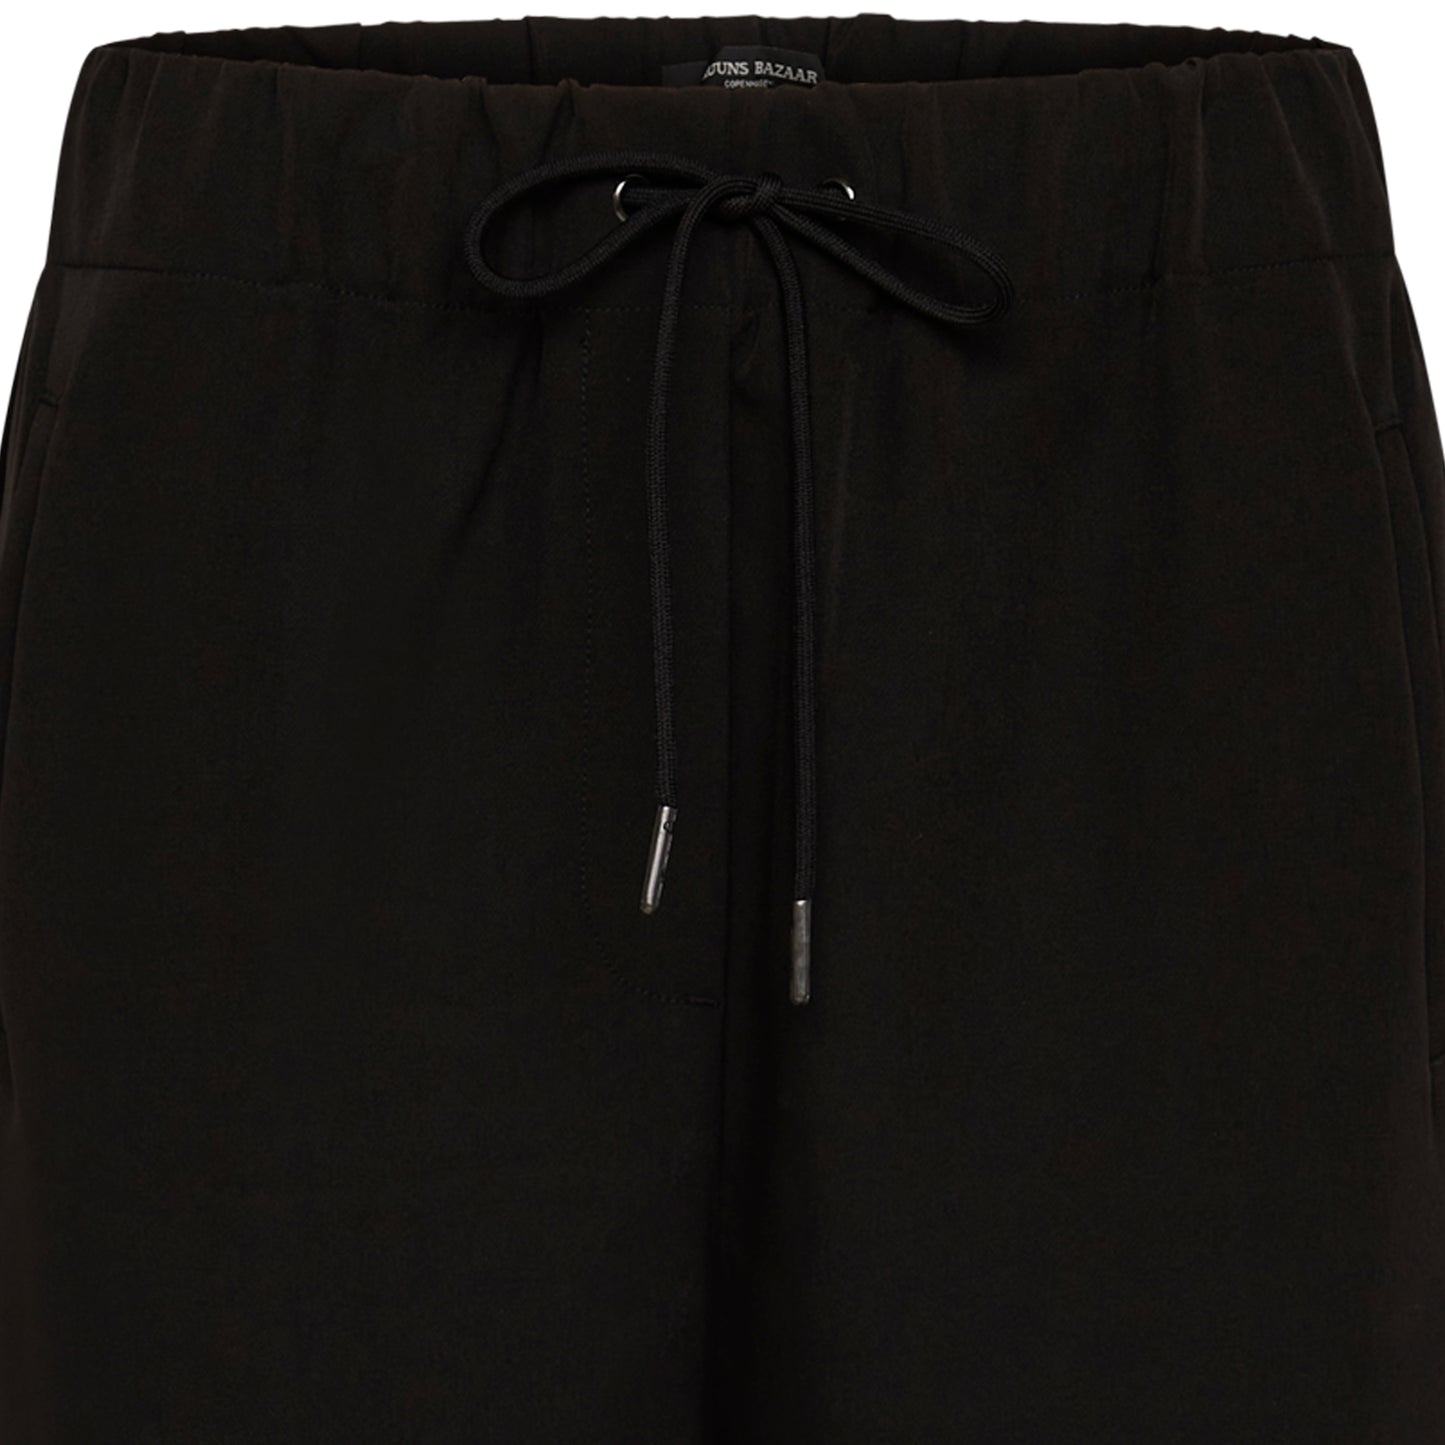 Bruuns Bazaar Women - RubySus Liwa pants - Black